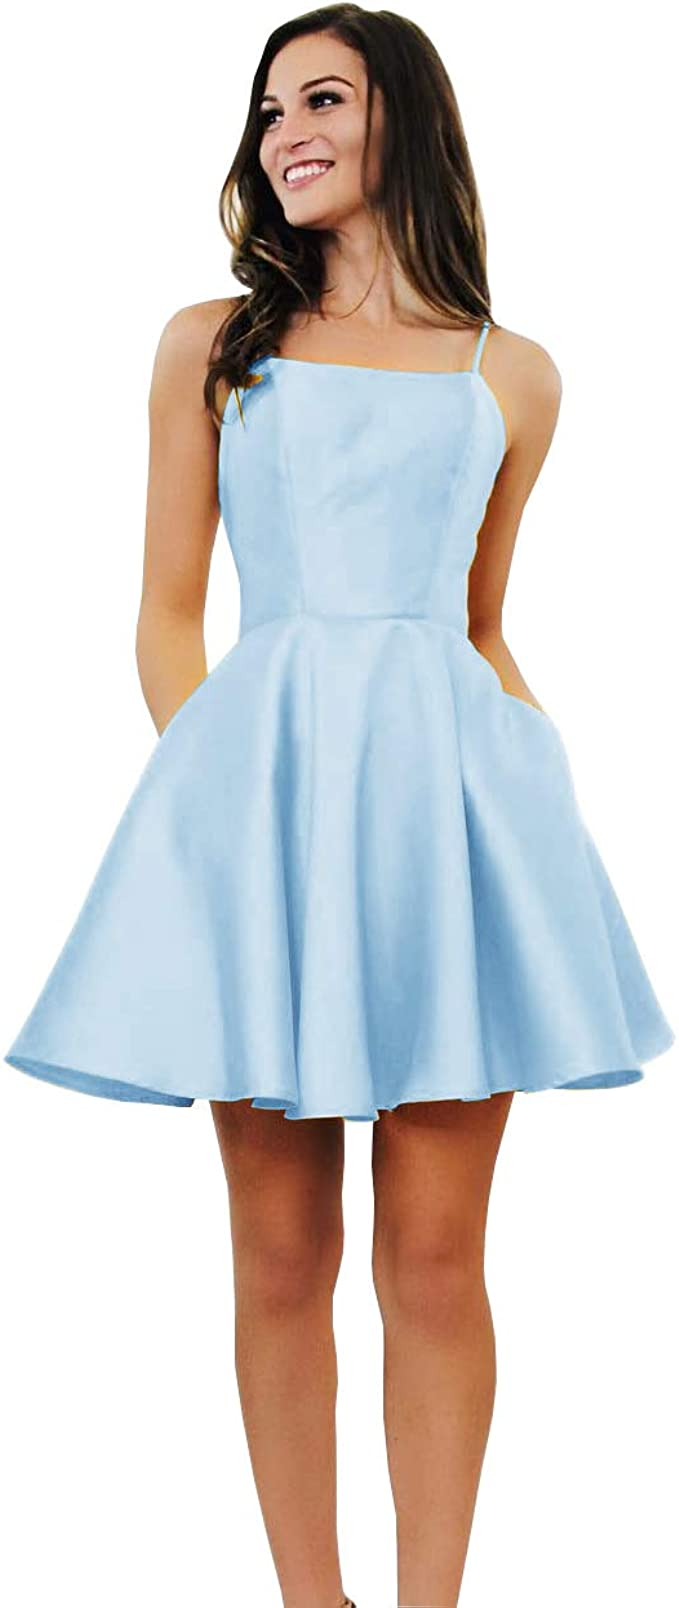 How to Wear Light Blue Short Dress Outfit Ideas for Women